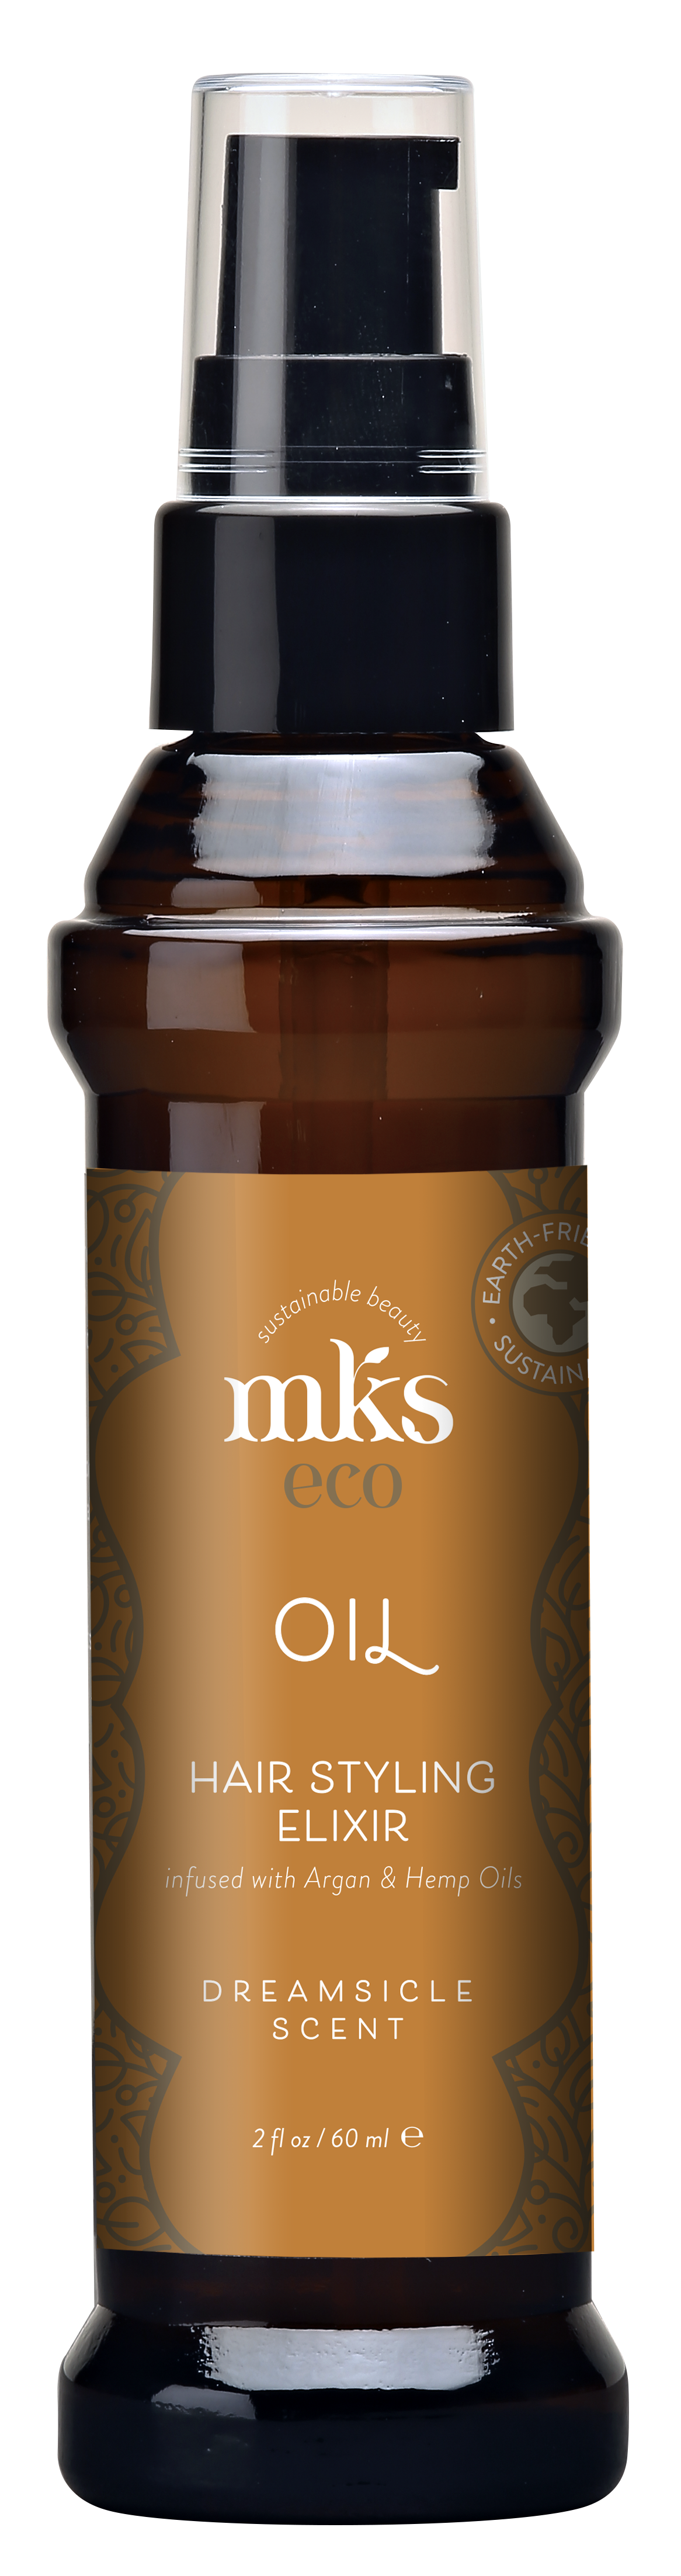 MKS eco Oil